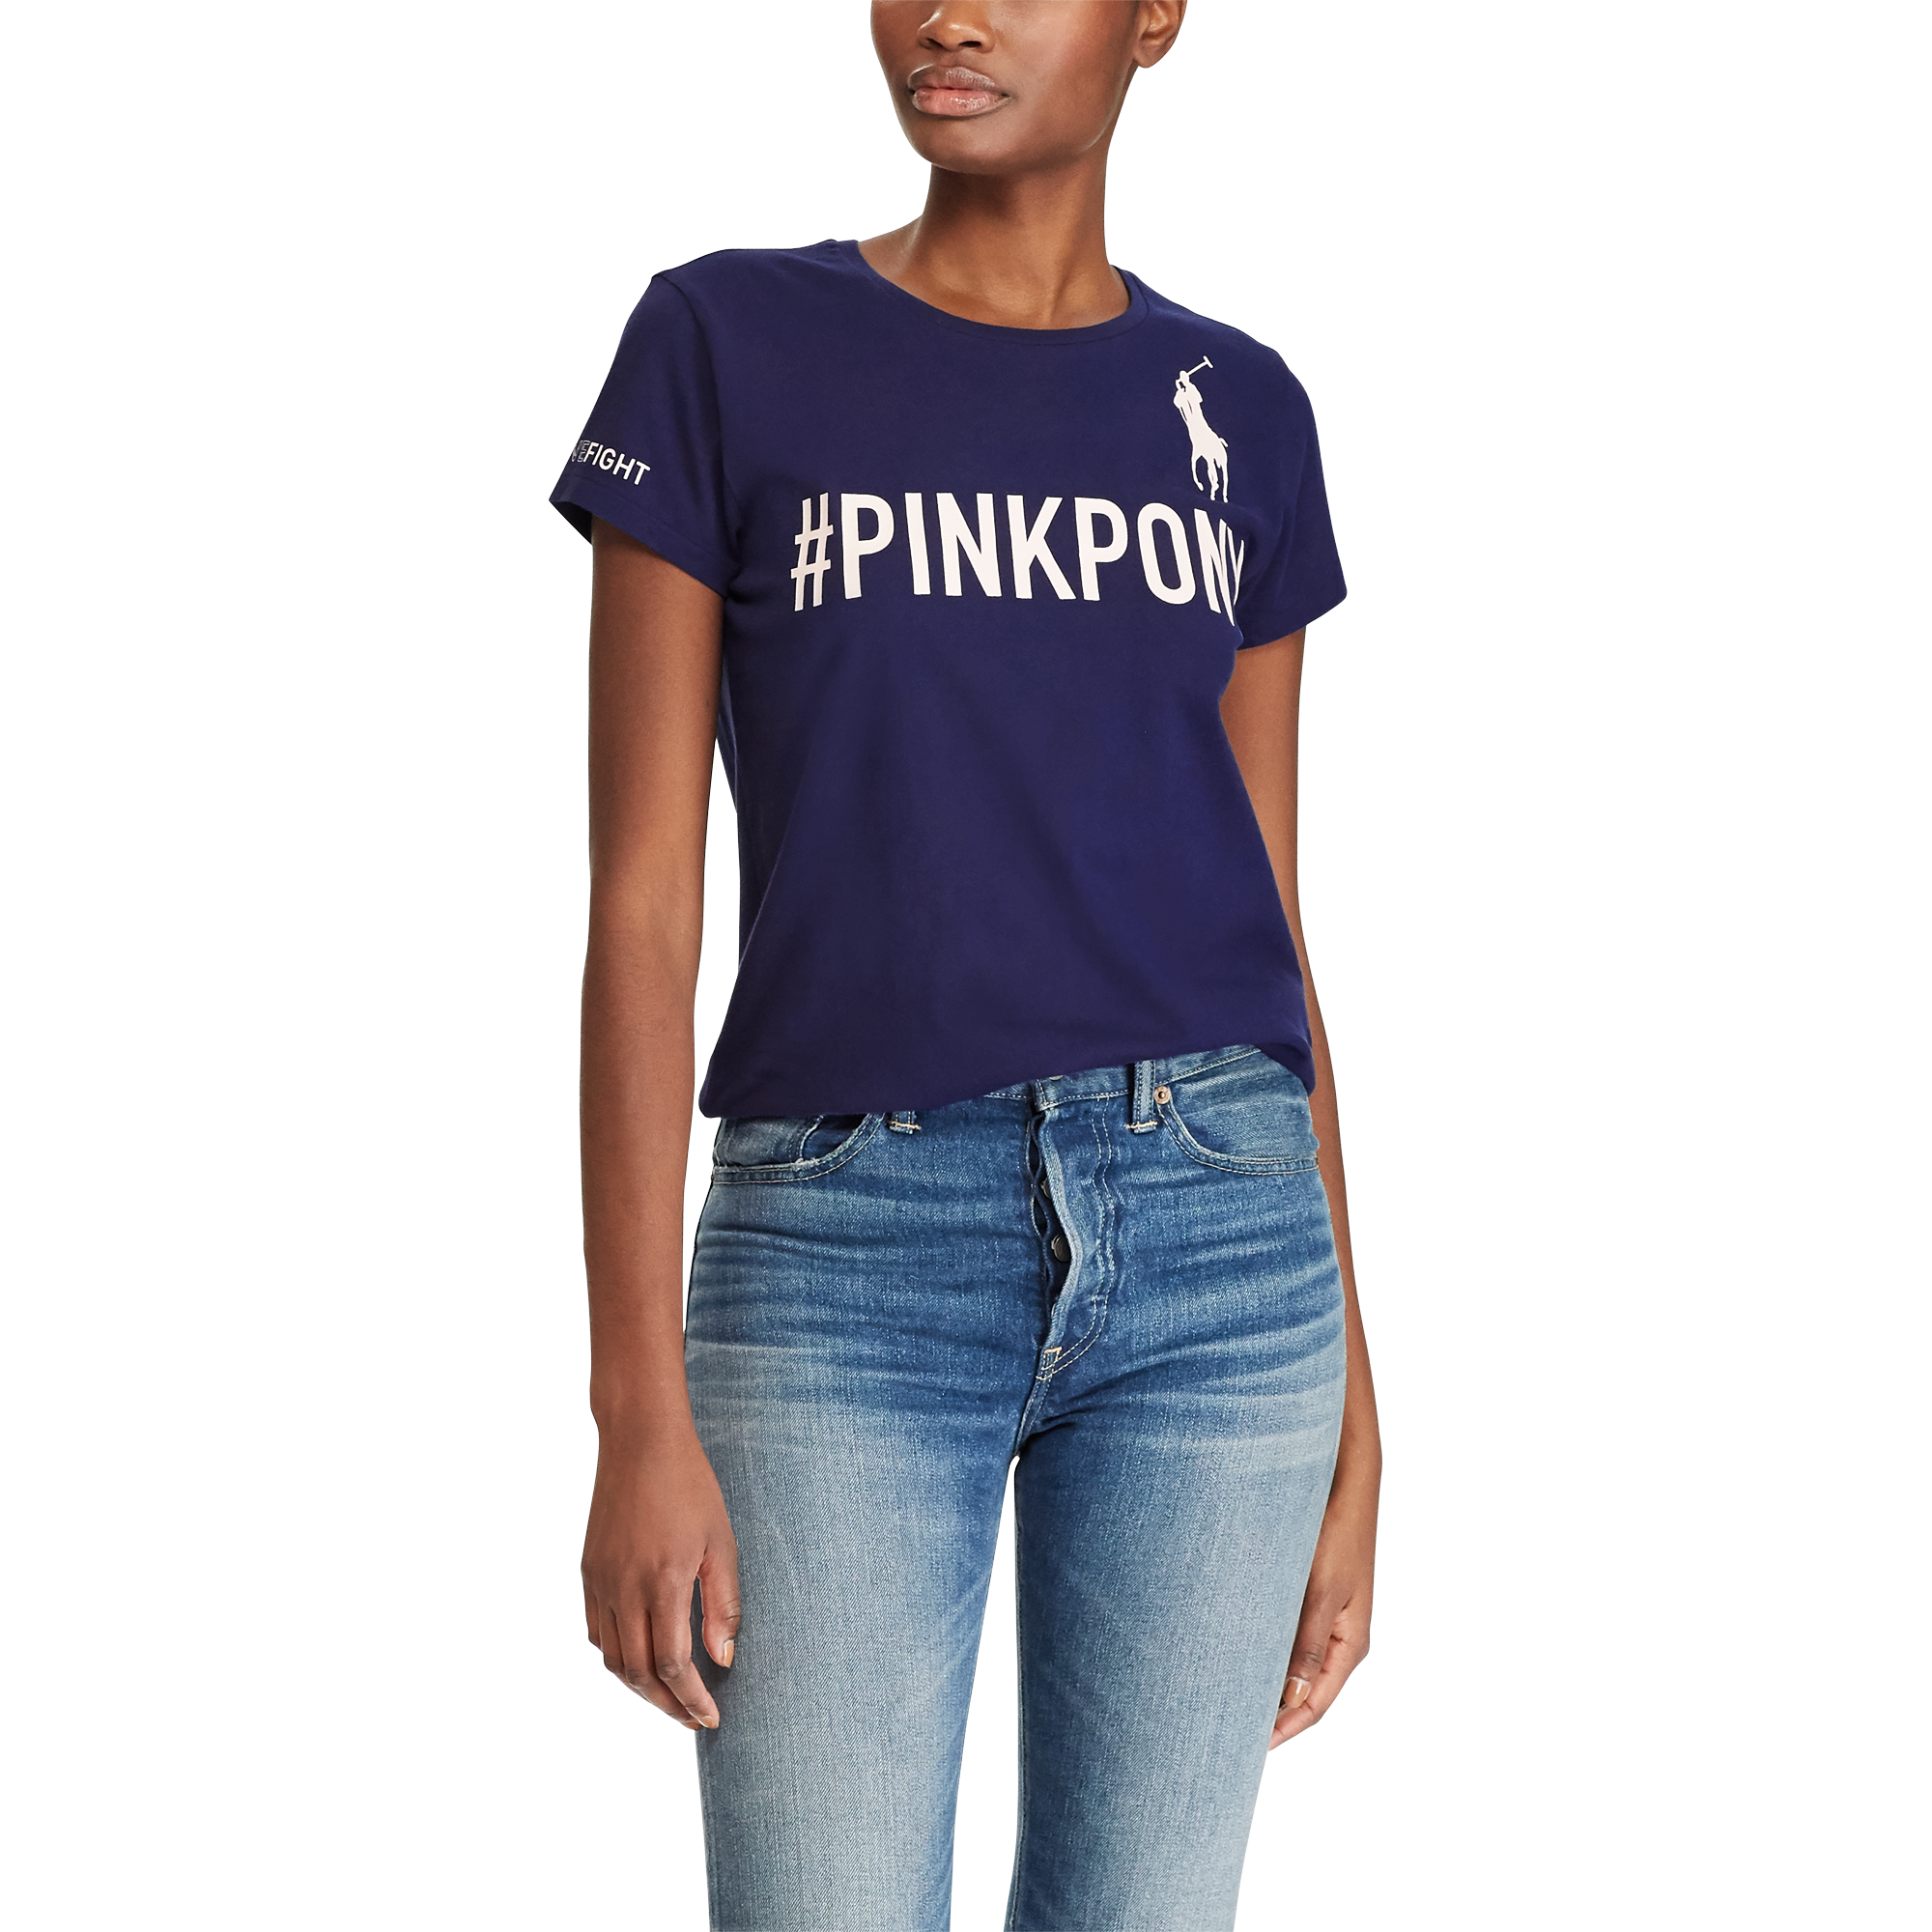 Ralph Lauren Pink Pony Graphic T-Shirt. 4